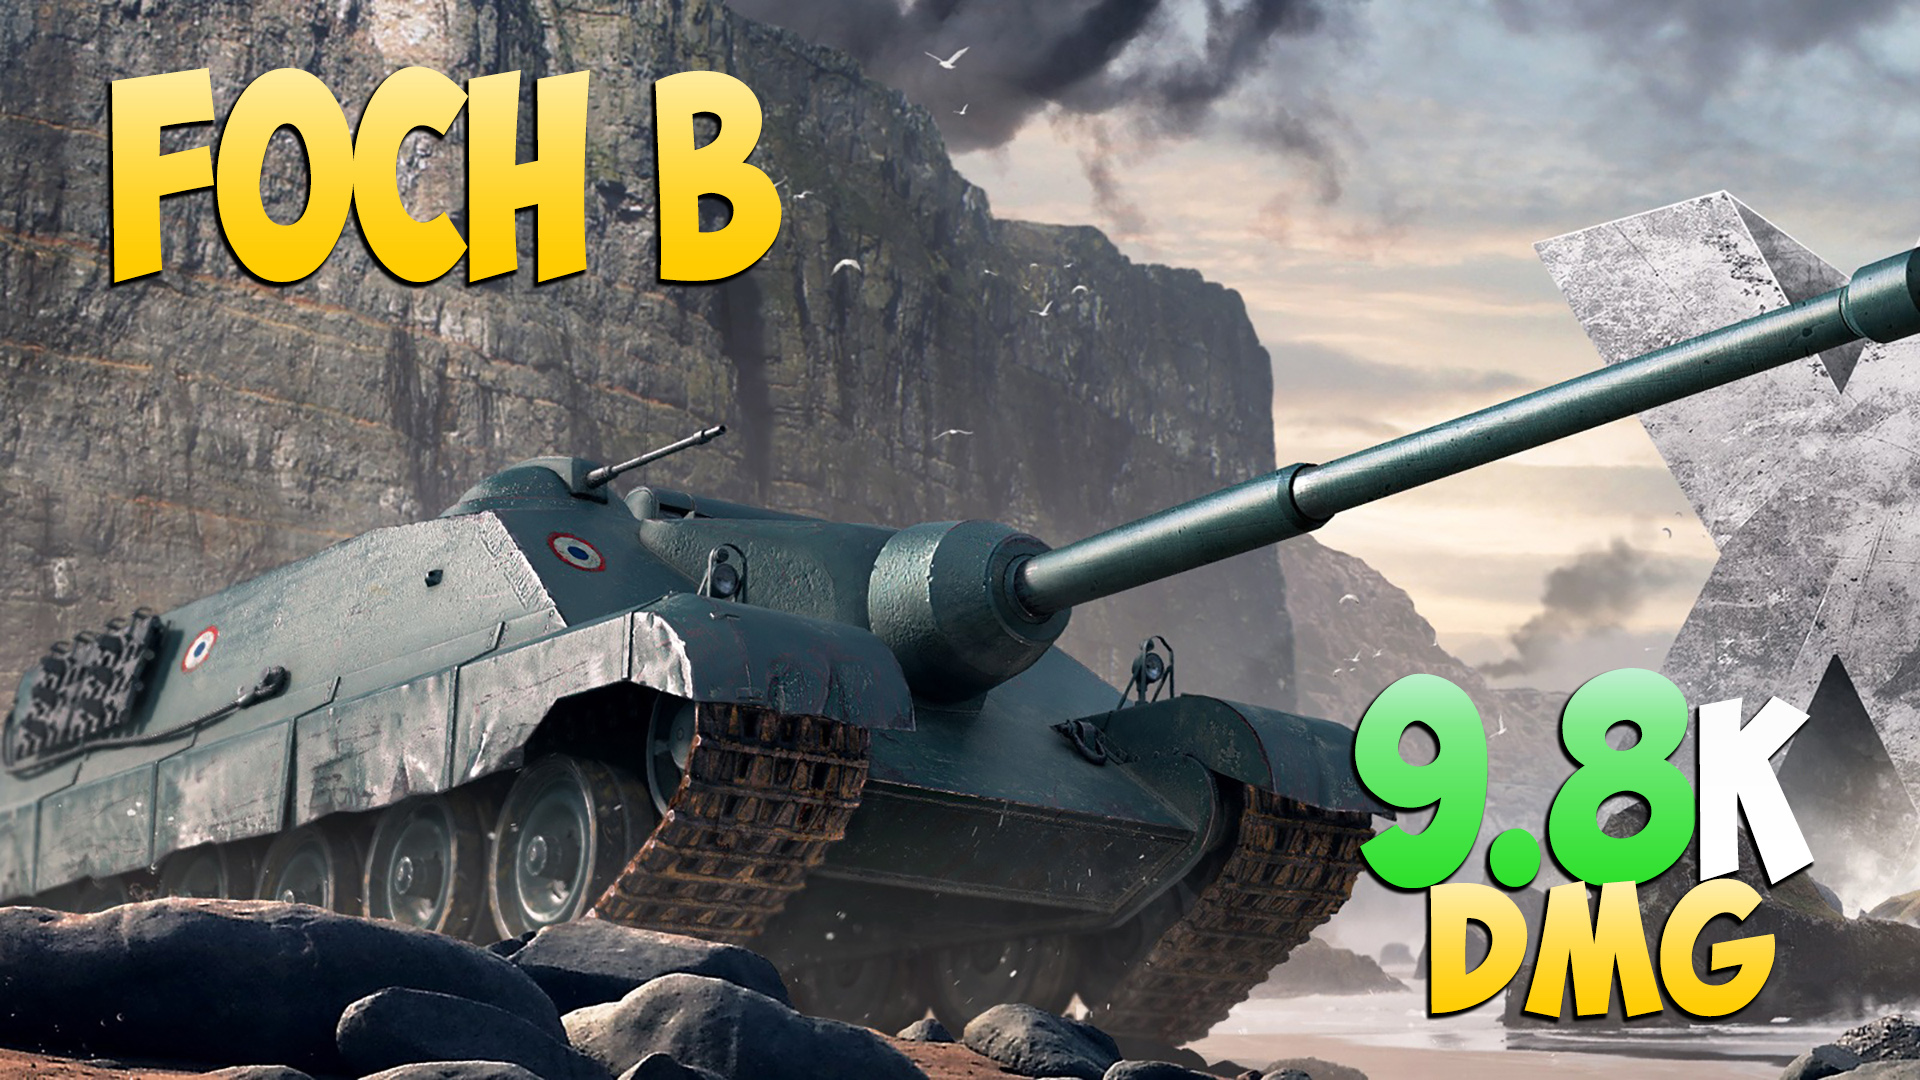 Foch B - 6 Фрагов 9.8K Урона - Раздирающий! - Мир Танков